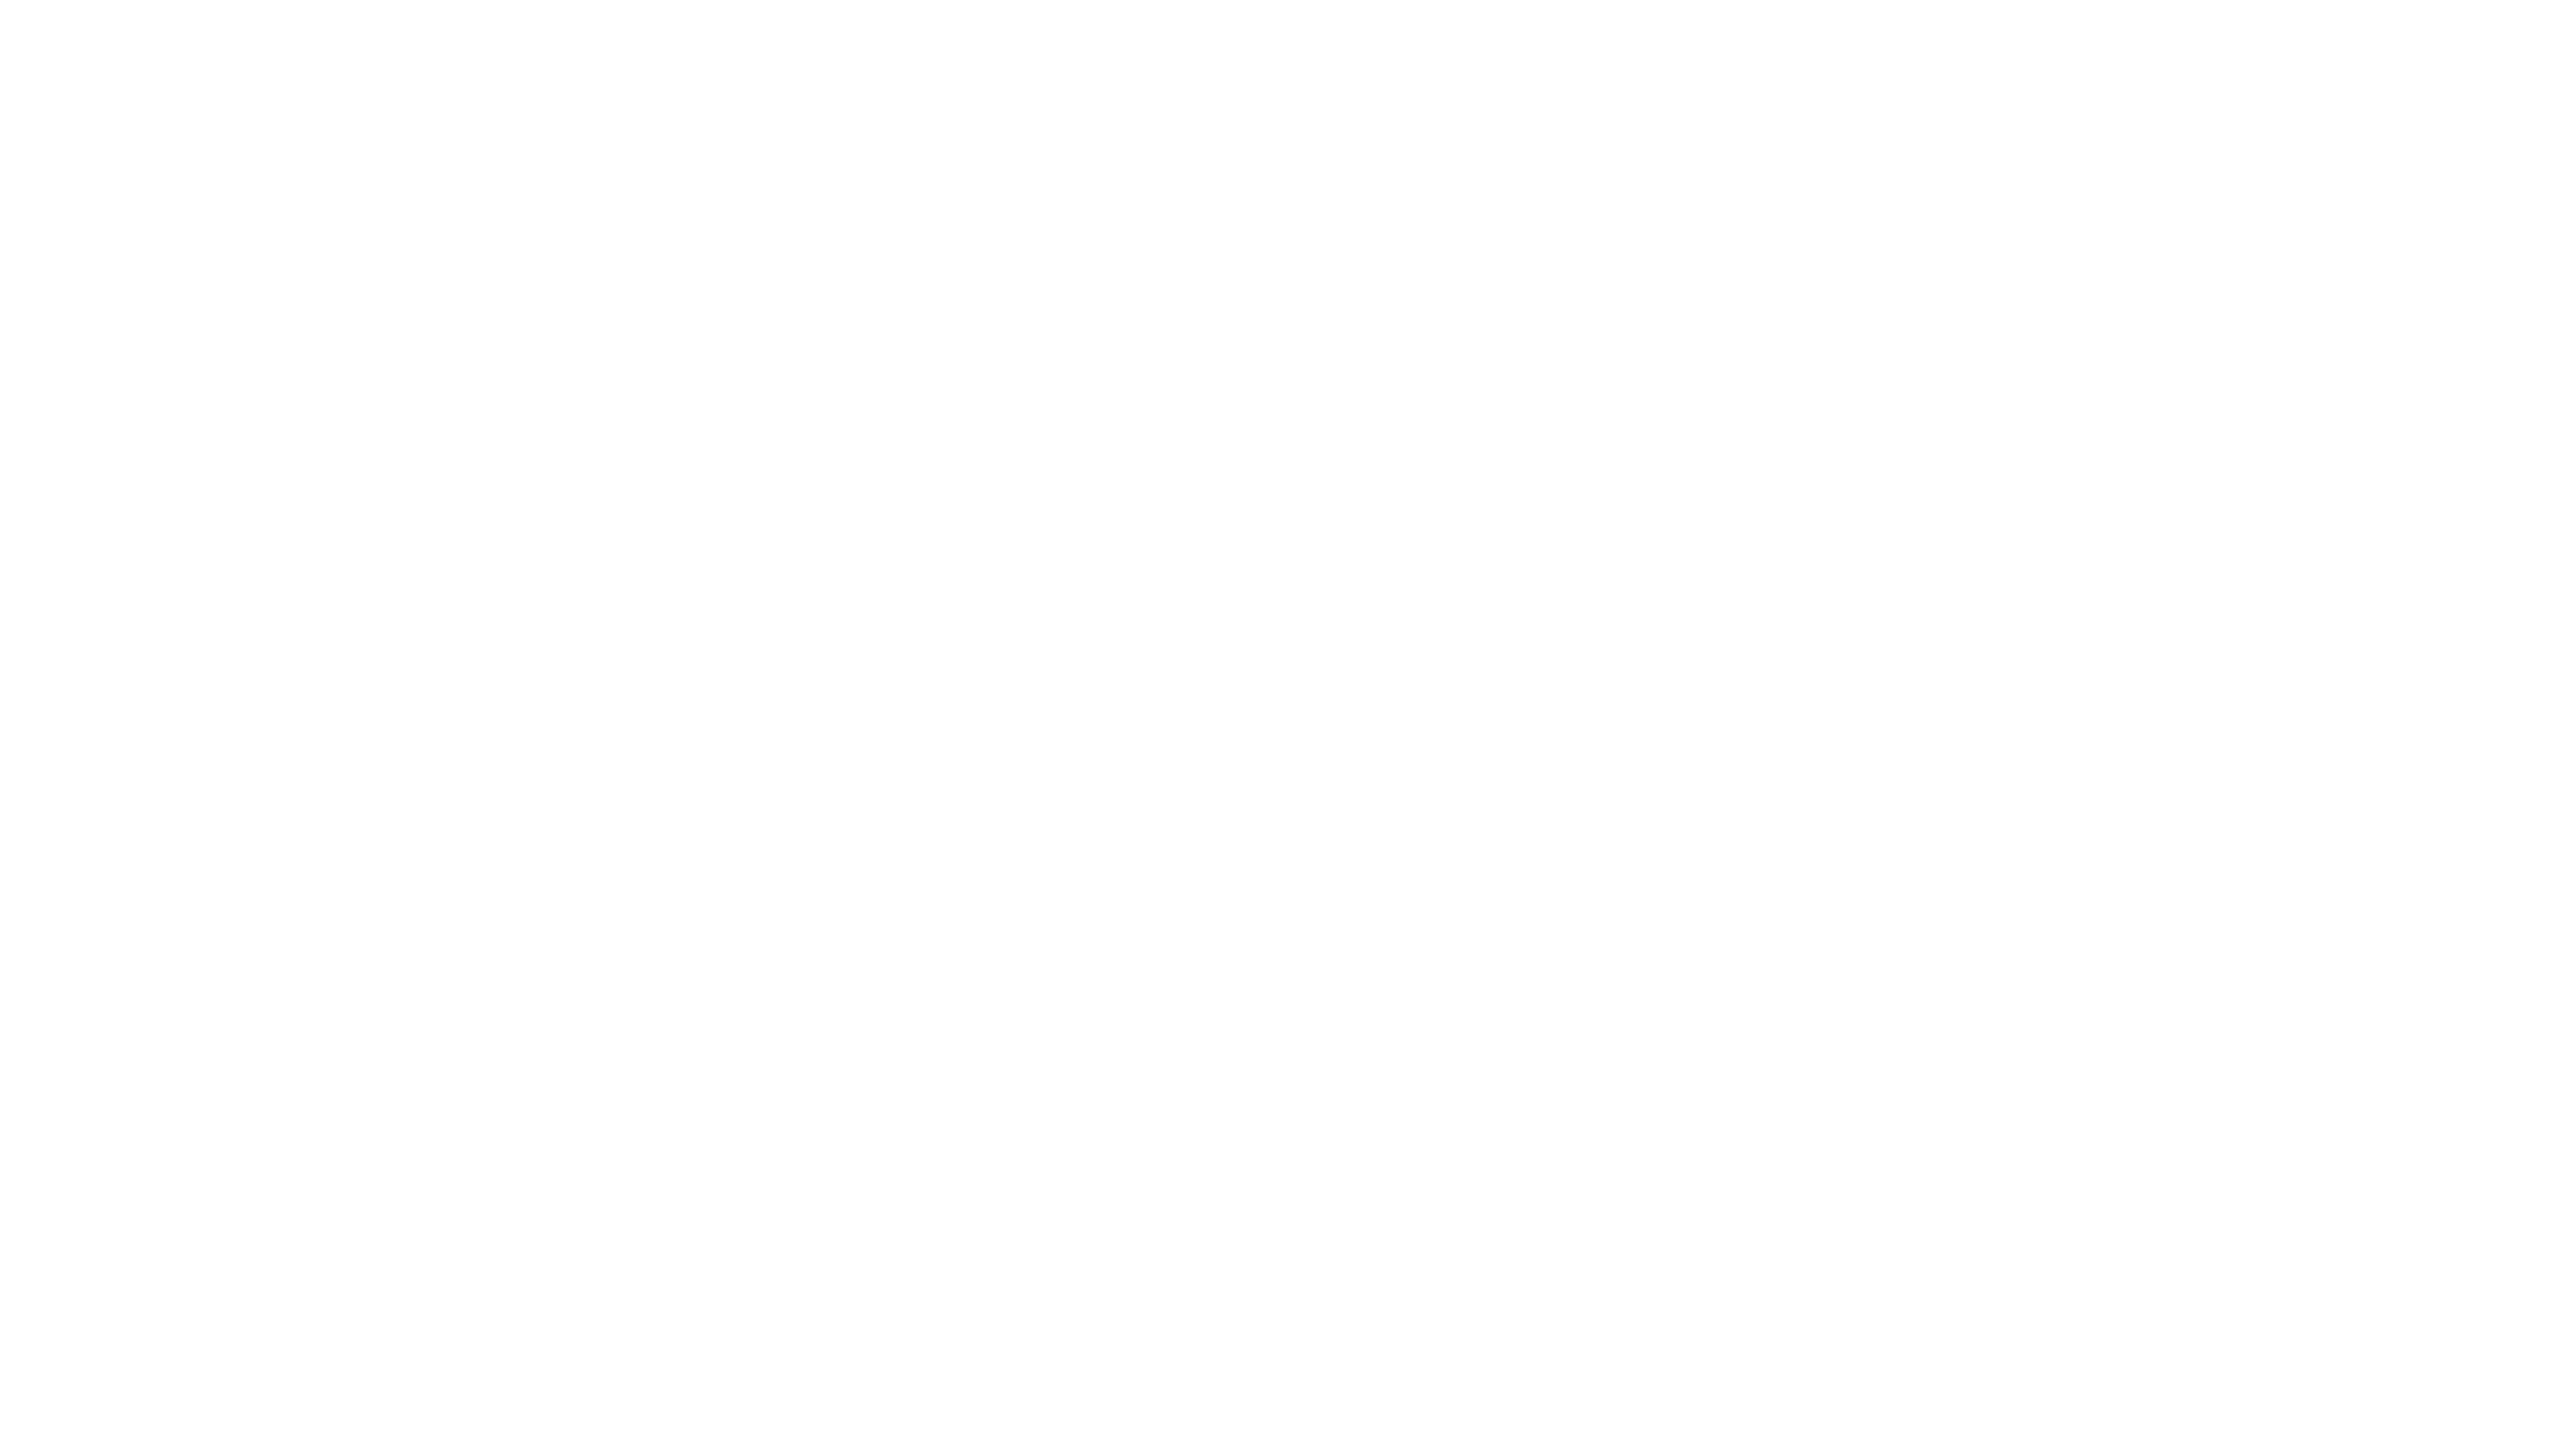 ROG X EVANGELION